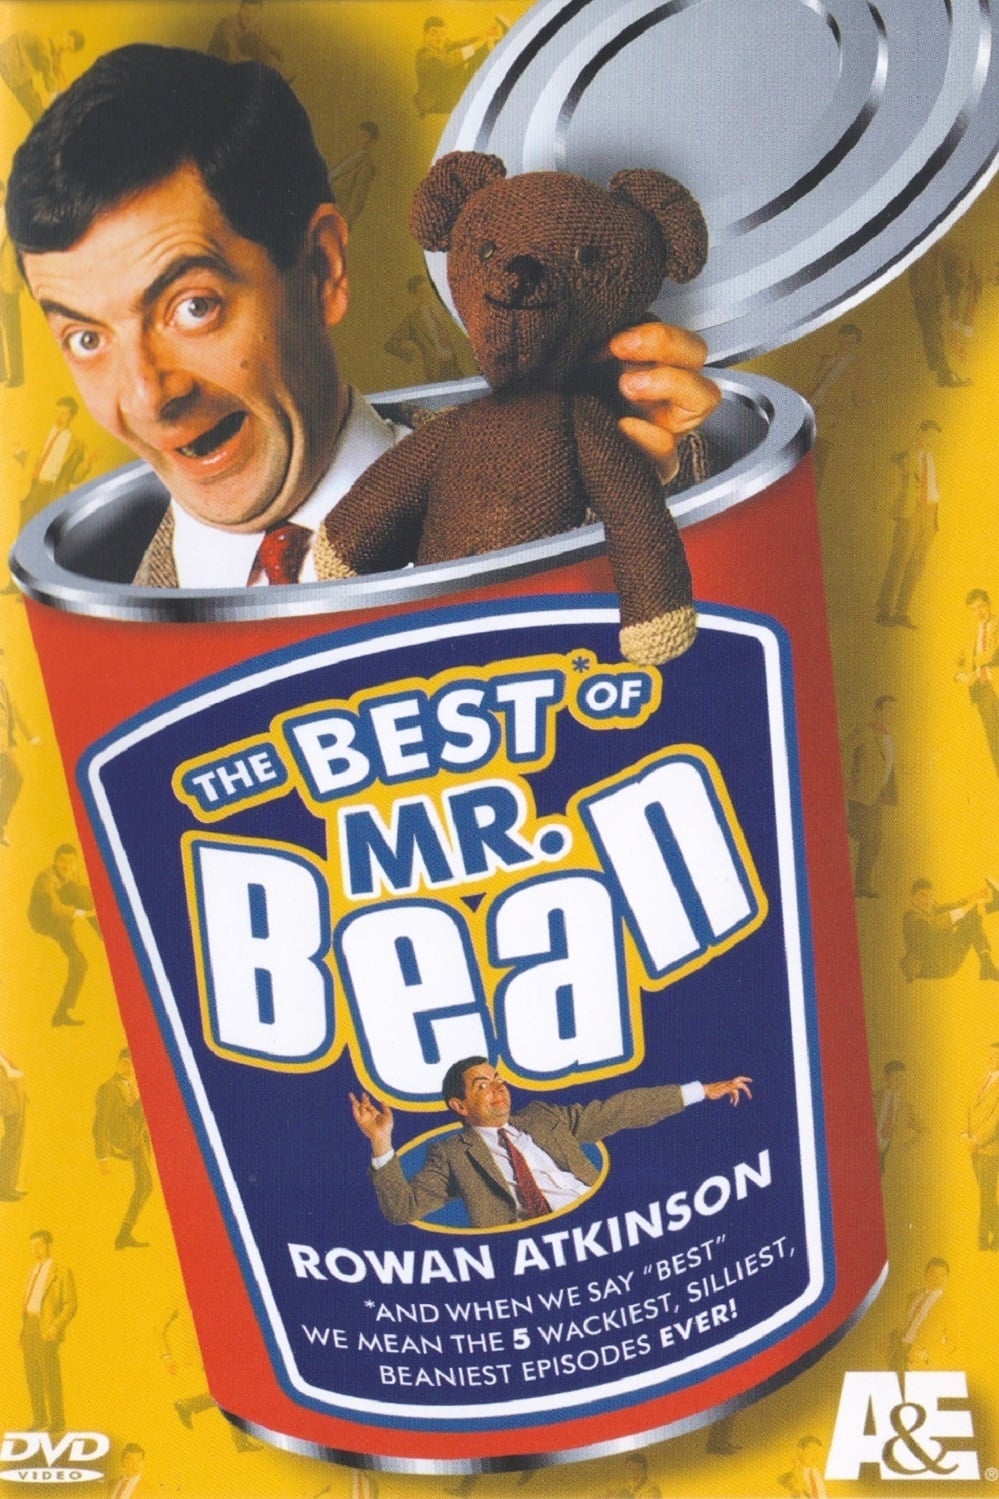 The Best of Mr. Bean film